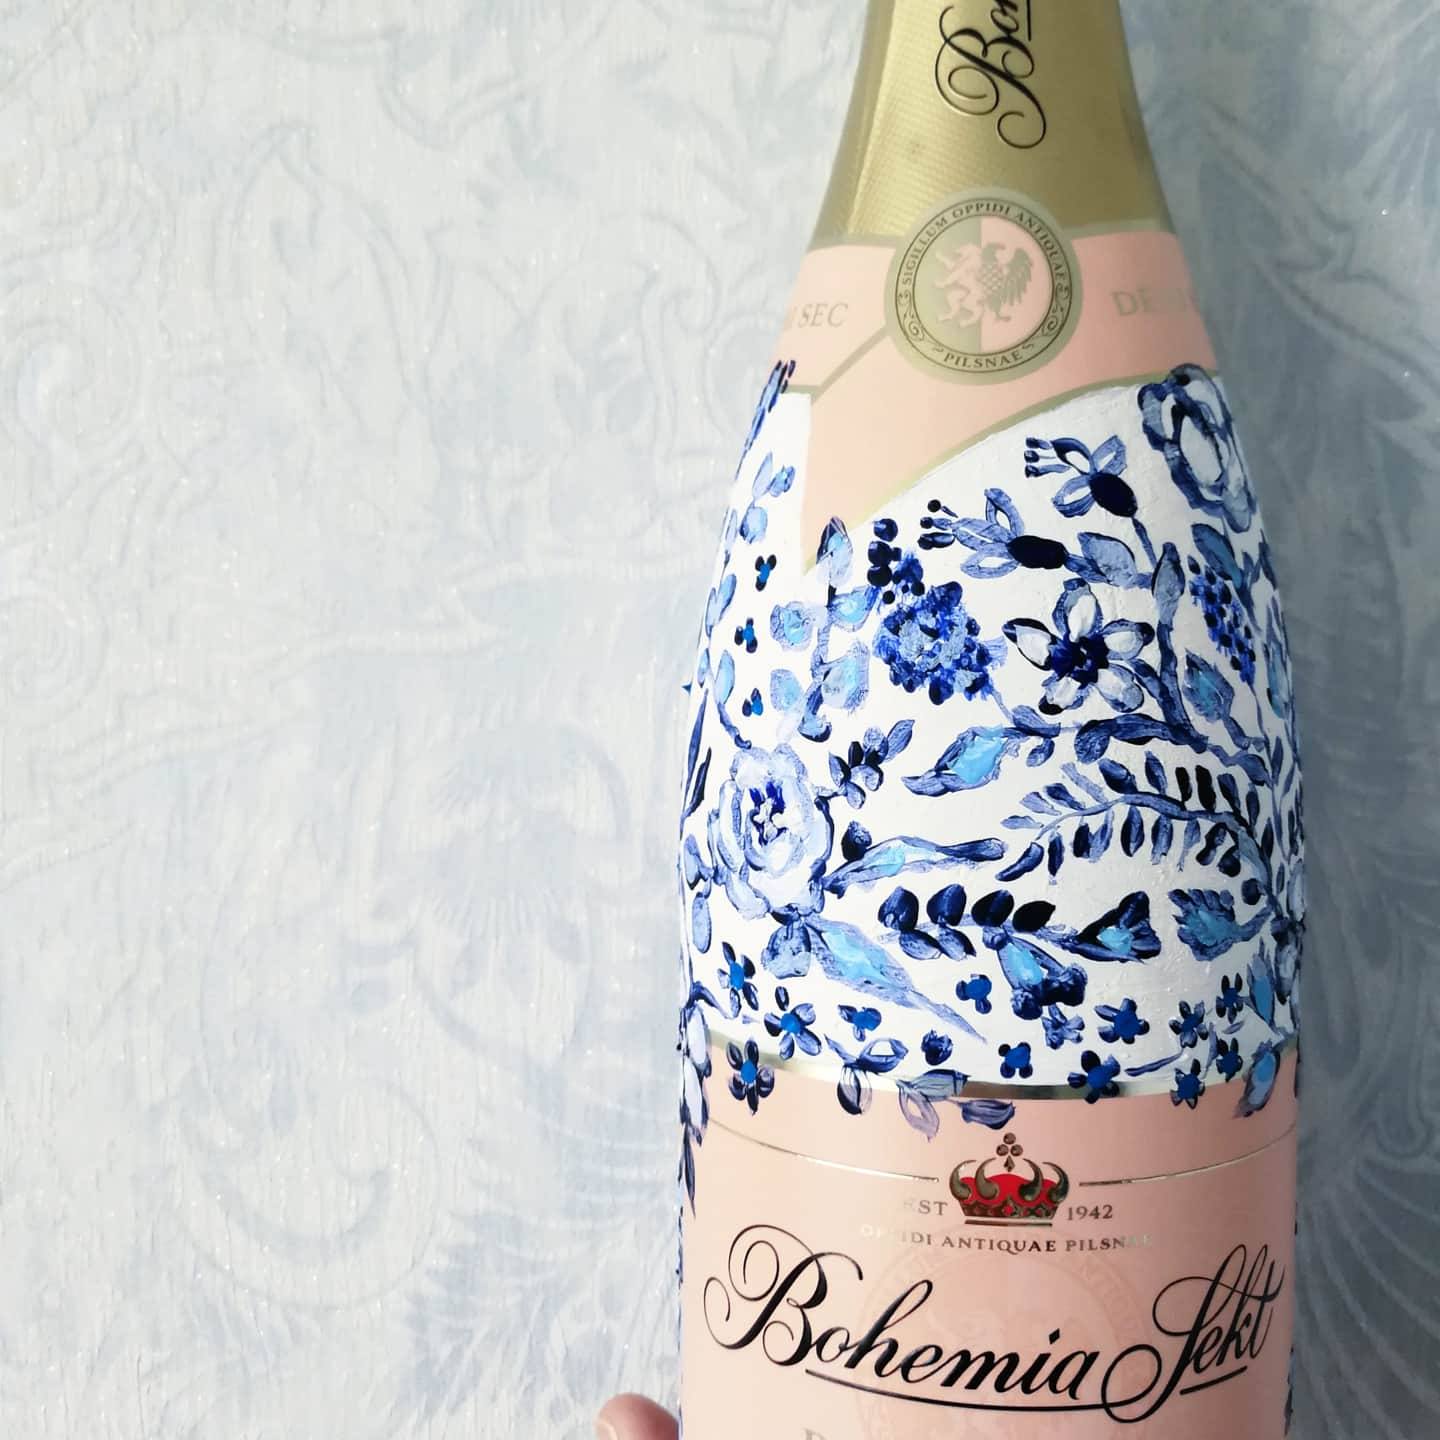 champagne bottle images